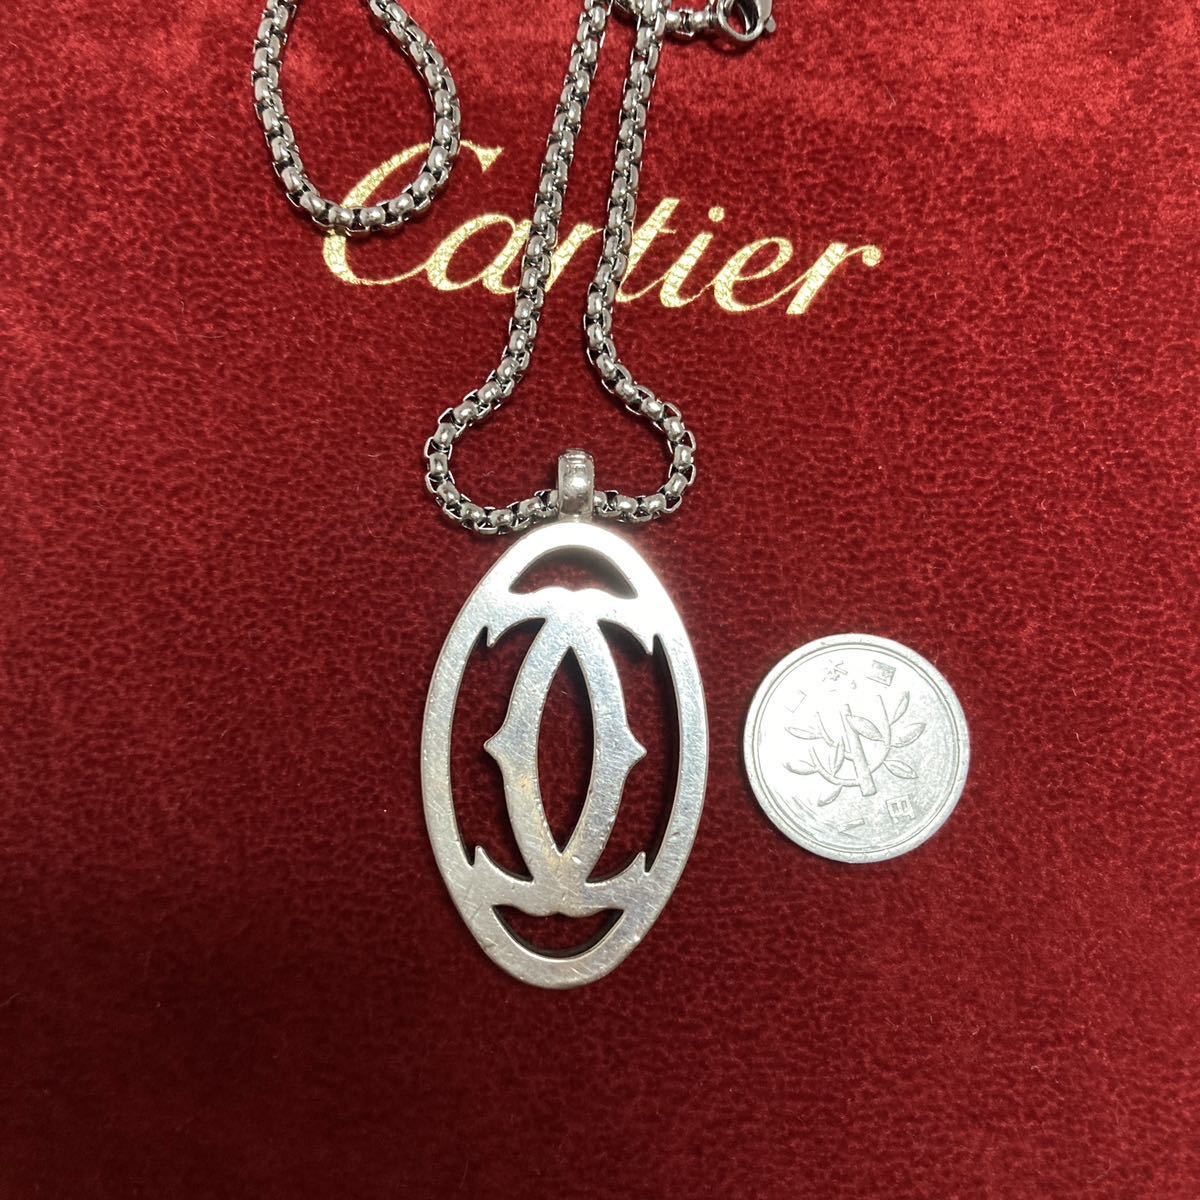 [ regular goods ] Cartier volume charm necklace Cartier with logo bene Cheer 60 centimeter necklace storage bag attaching 